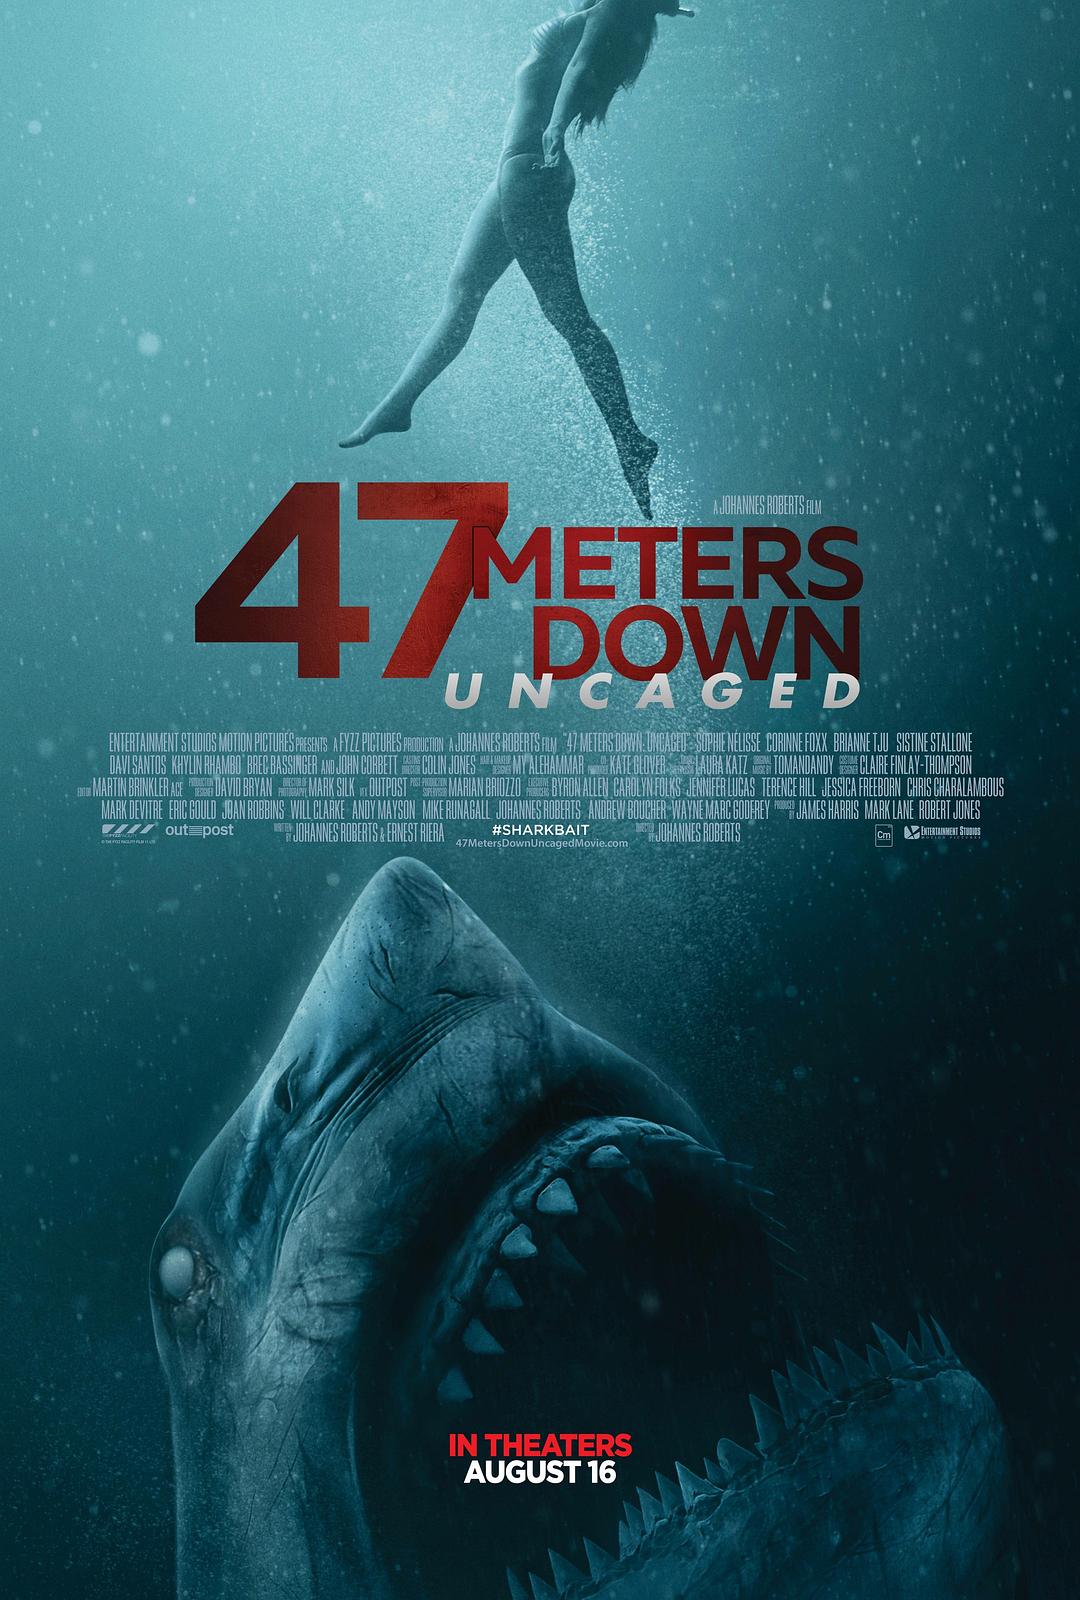 鲨海逃生【 DIY 简英繁英+简繁体字幕 】 47 Meters Down Uncaged 2019 Repack BluRay 1080p AVC DTS-HD MA5.1-LGenEratioNK@OurBits    [22.33 GB]-1.jpg